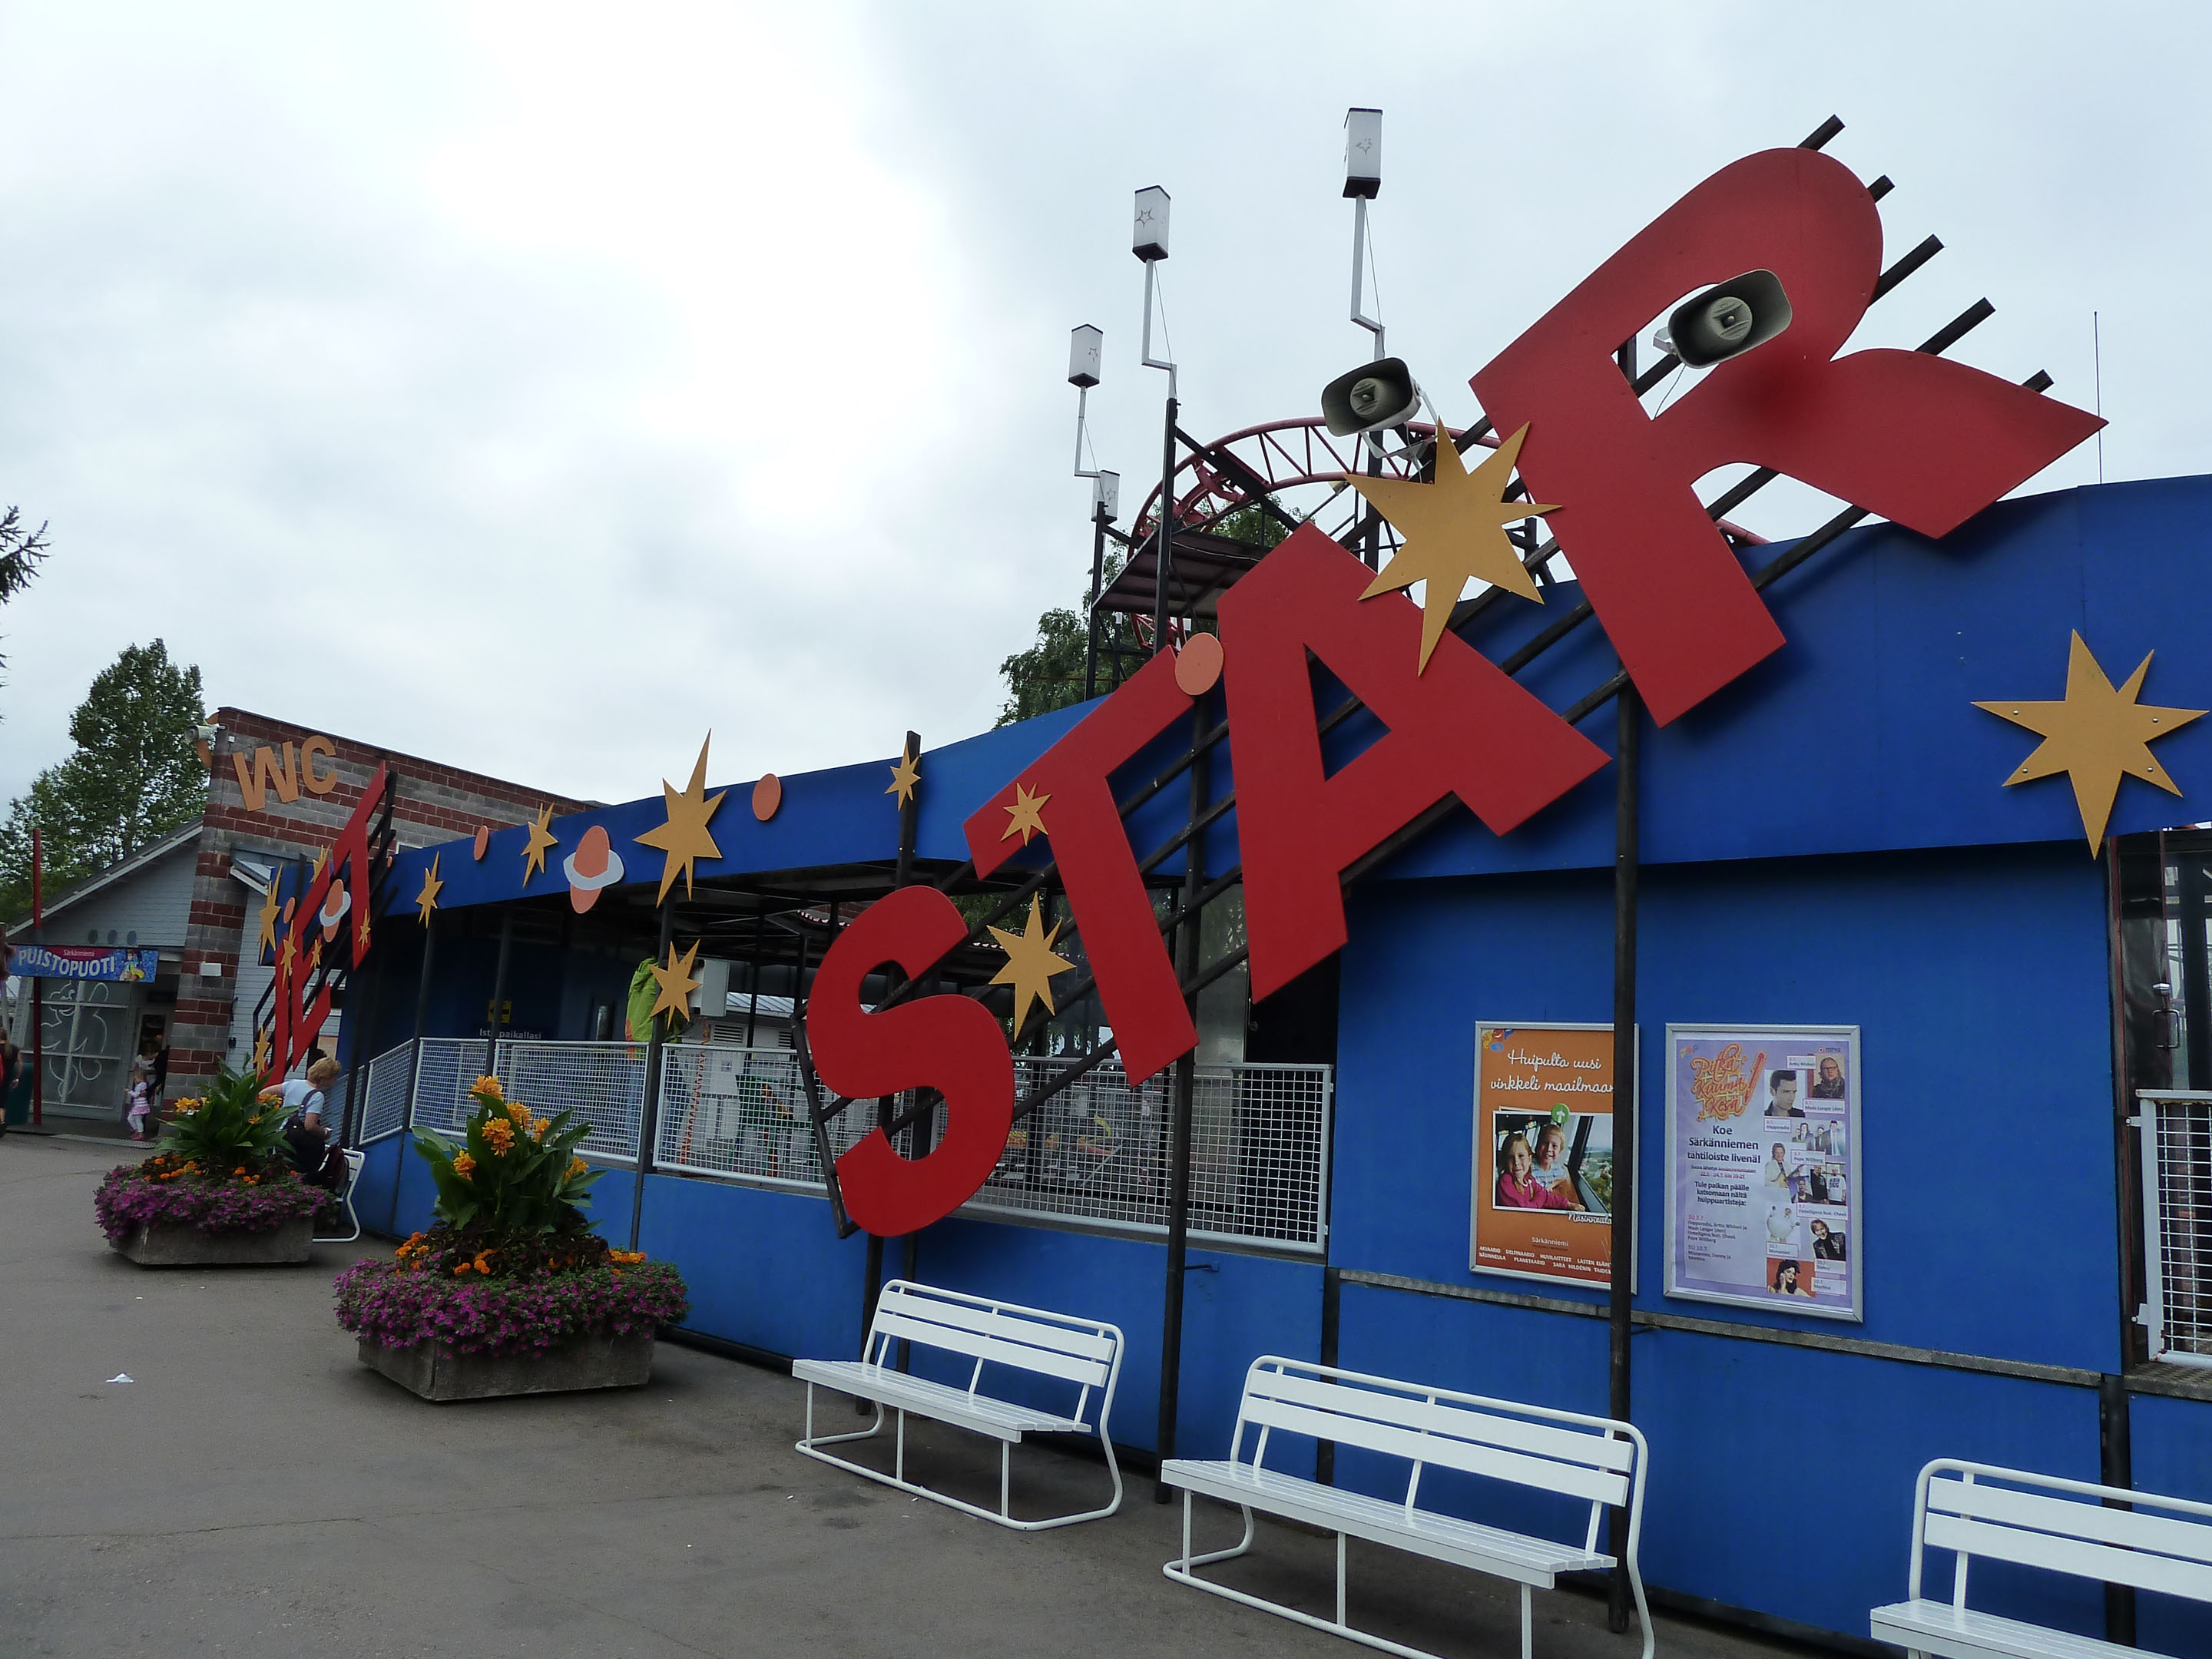 Jet Star - Särkänniemi Amusement Park (Tampere, Pirkanmaa, Finland)